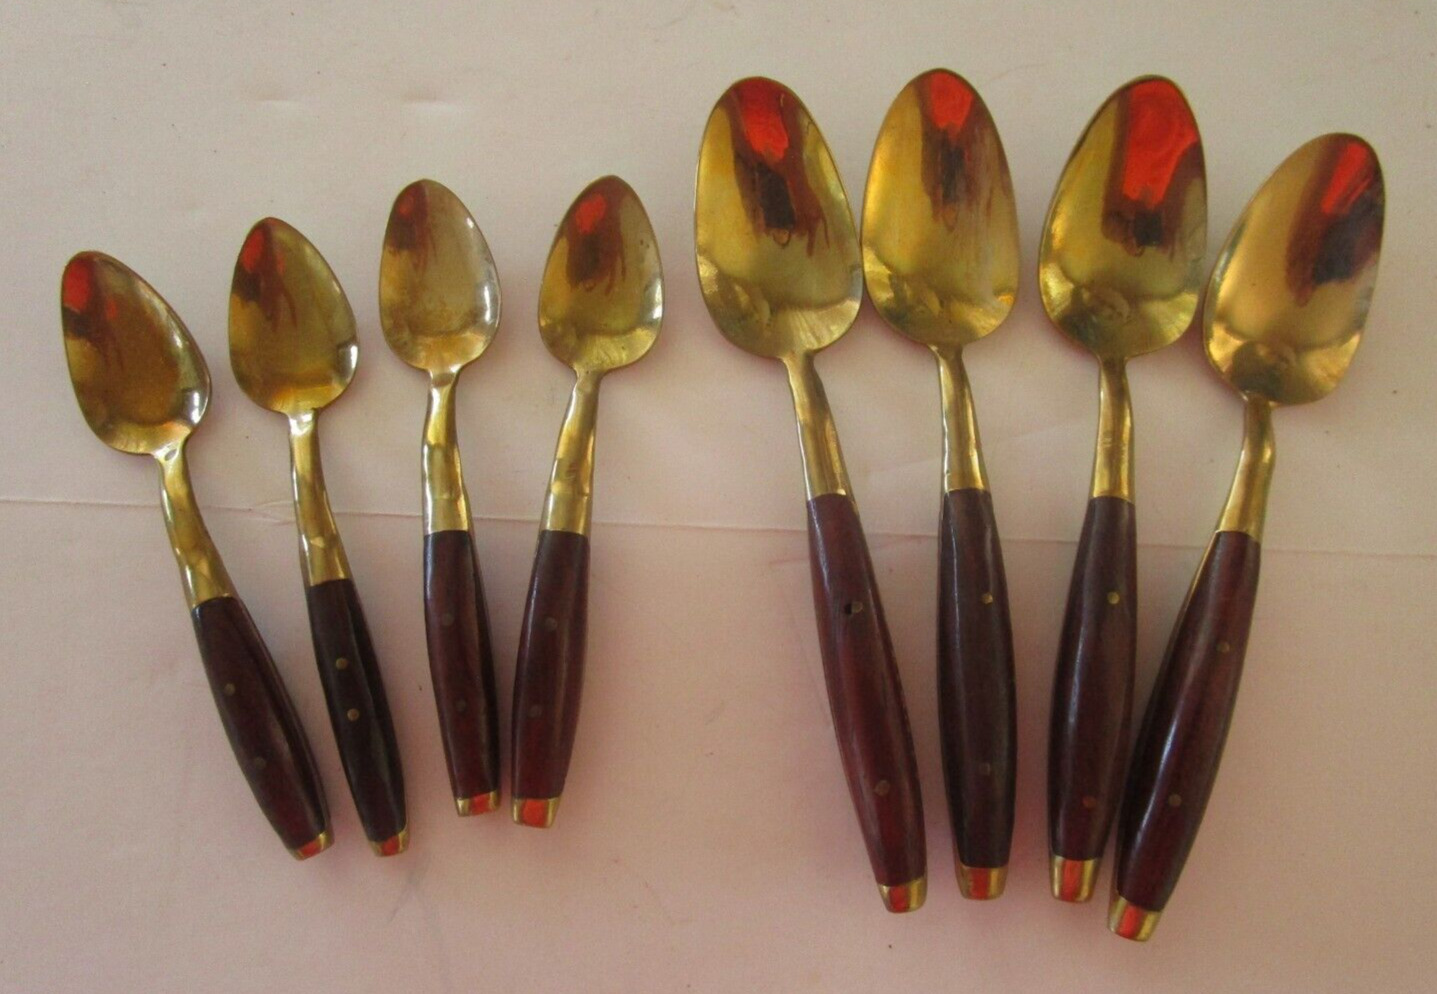 8 Spoons Brass Bronze color Flatware Siam - 4 Demitasse, 4 Dinner